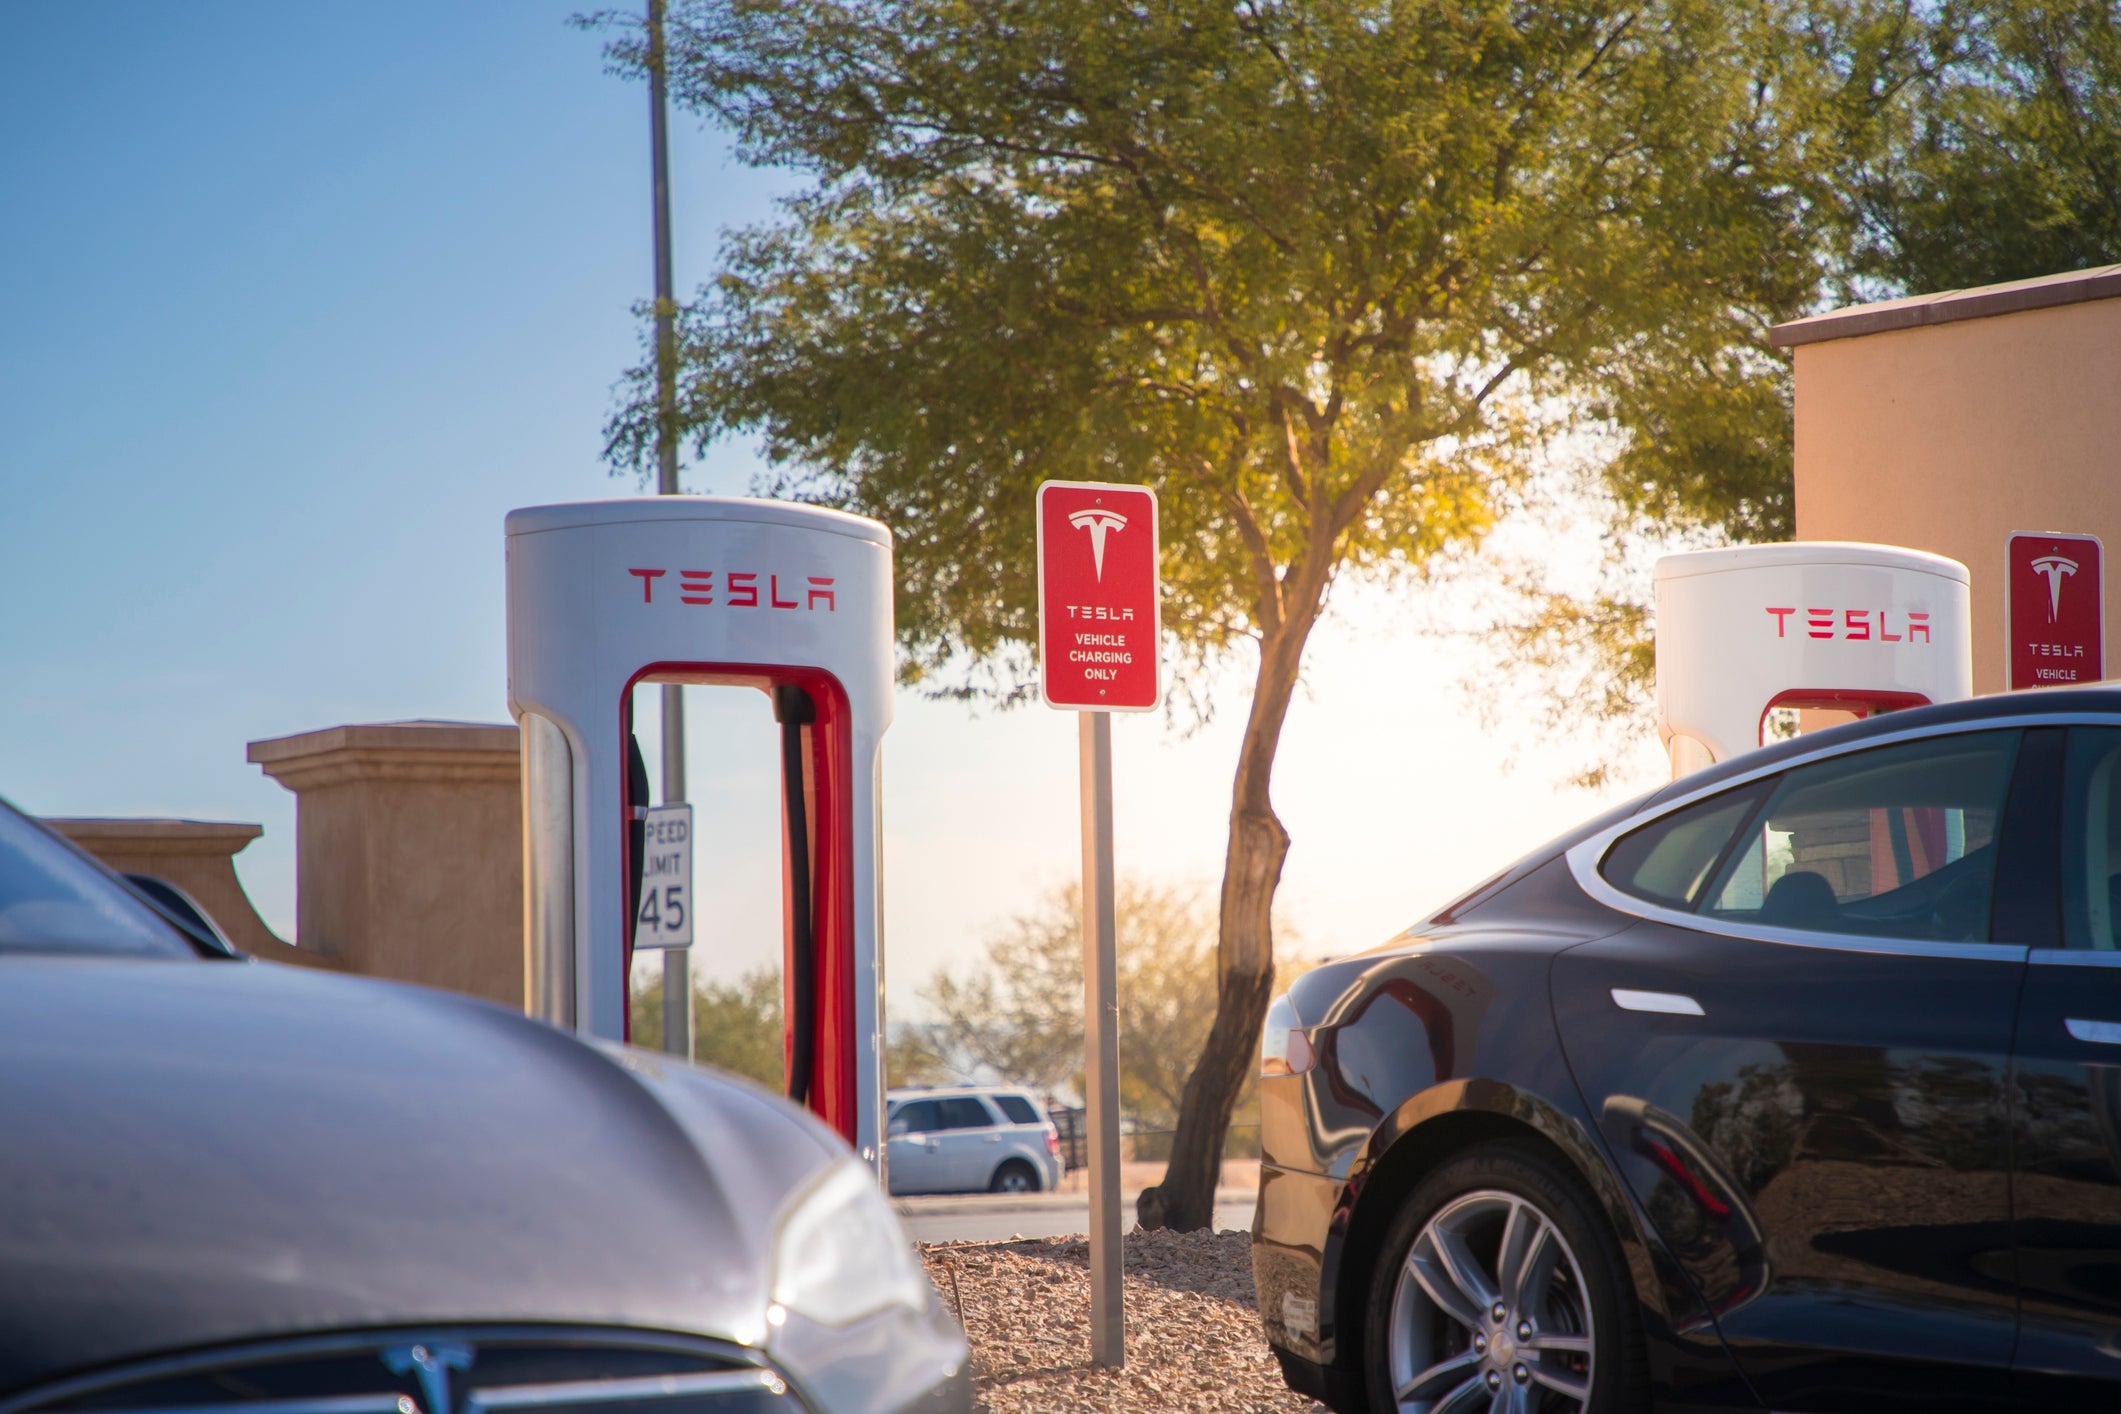 Tesla Supercharger charging station in Las Vegas, Nevada.